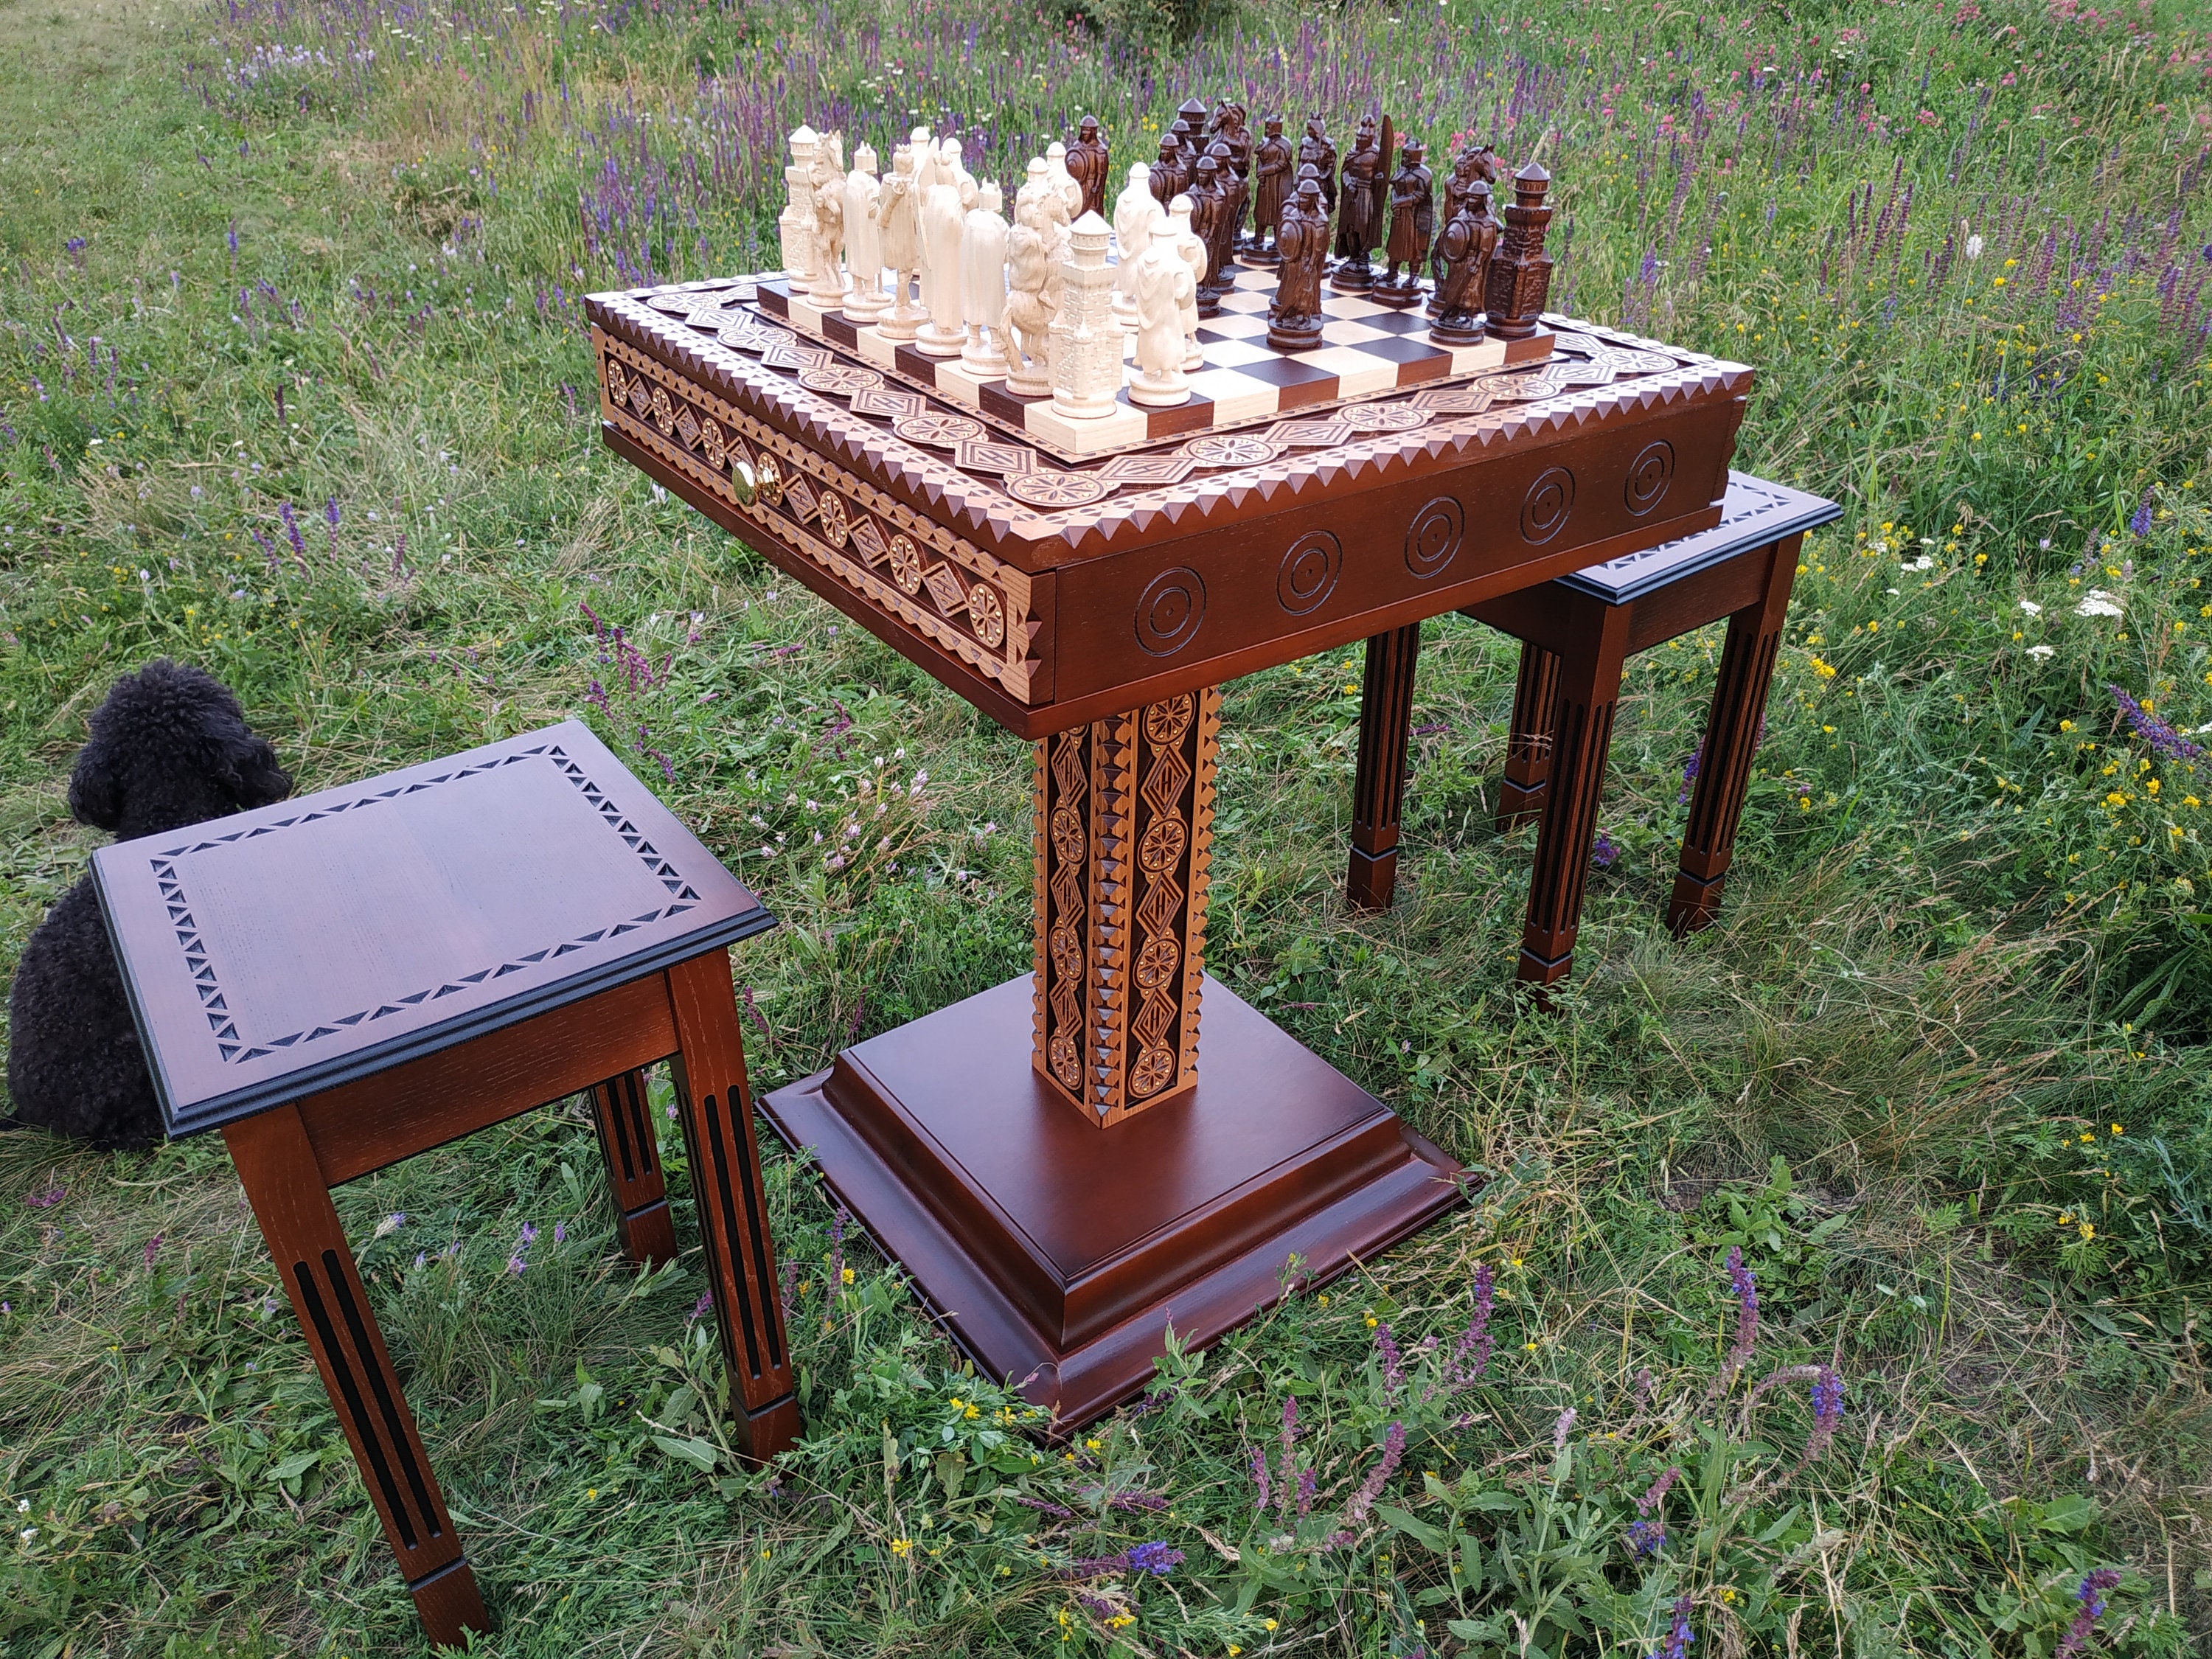 Chess Drinking Game Wood Board Professional Shogi Table Adult Retro Pieces  Chess Gift Xadrez Tabuleiro Jogo Getting Started